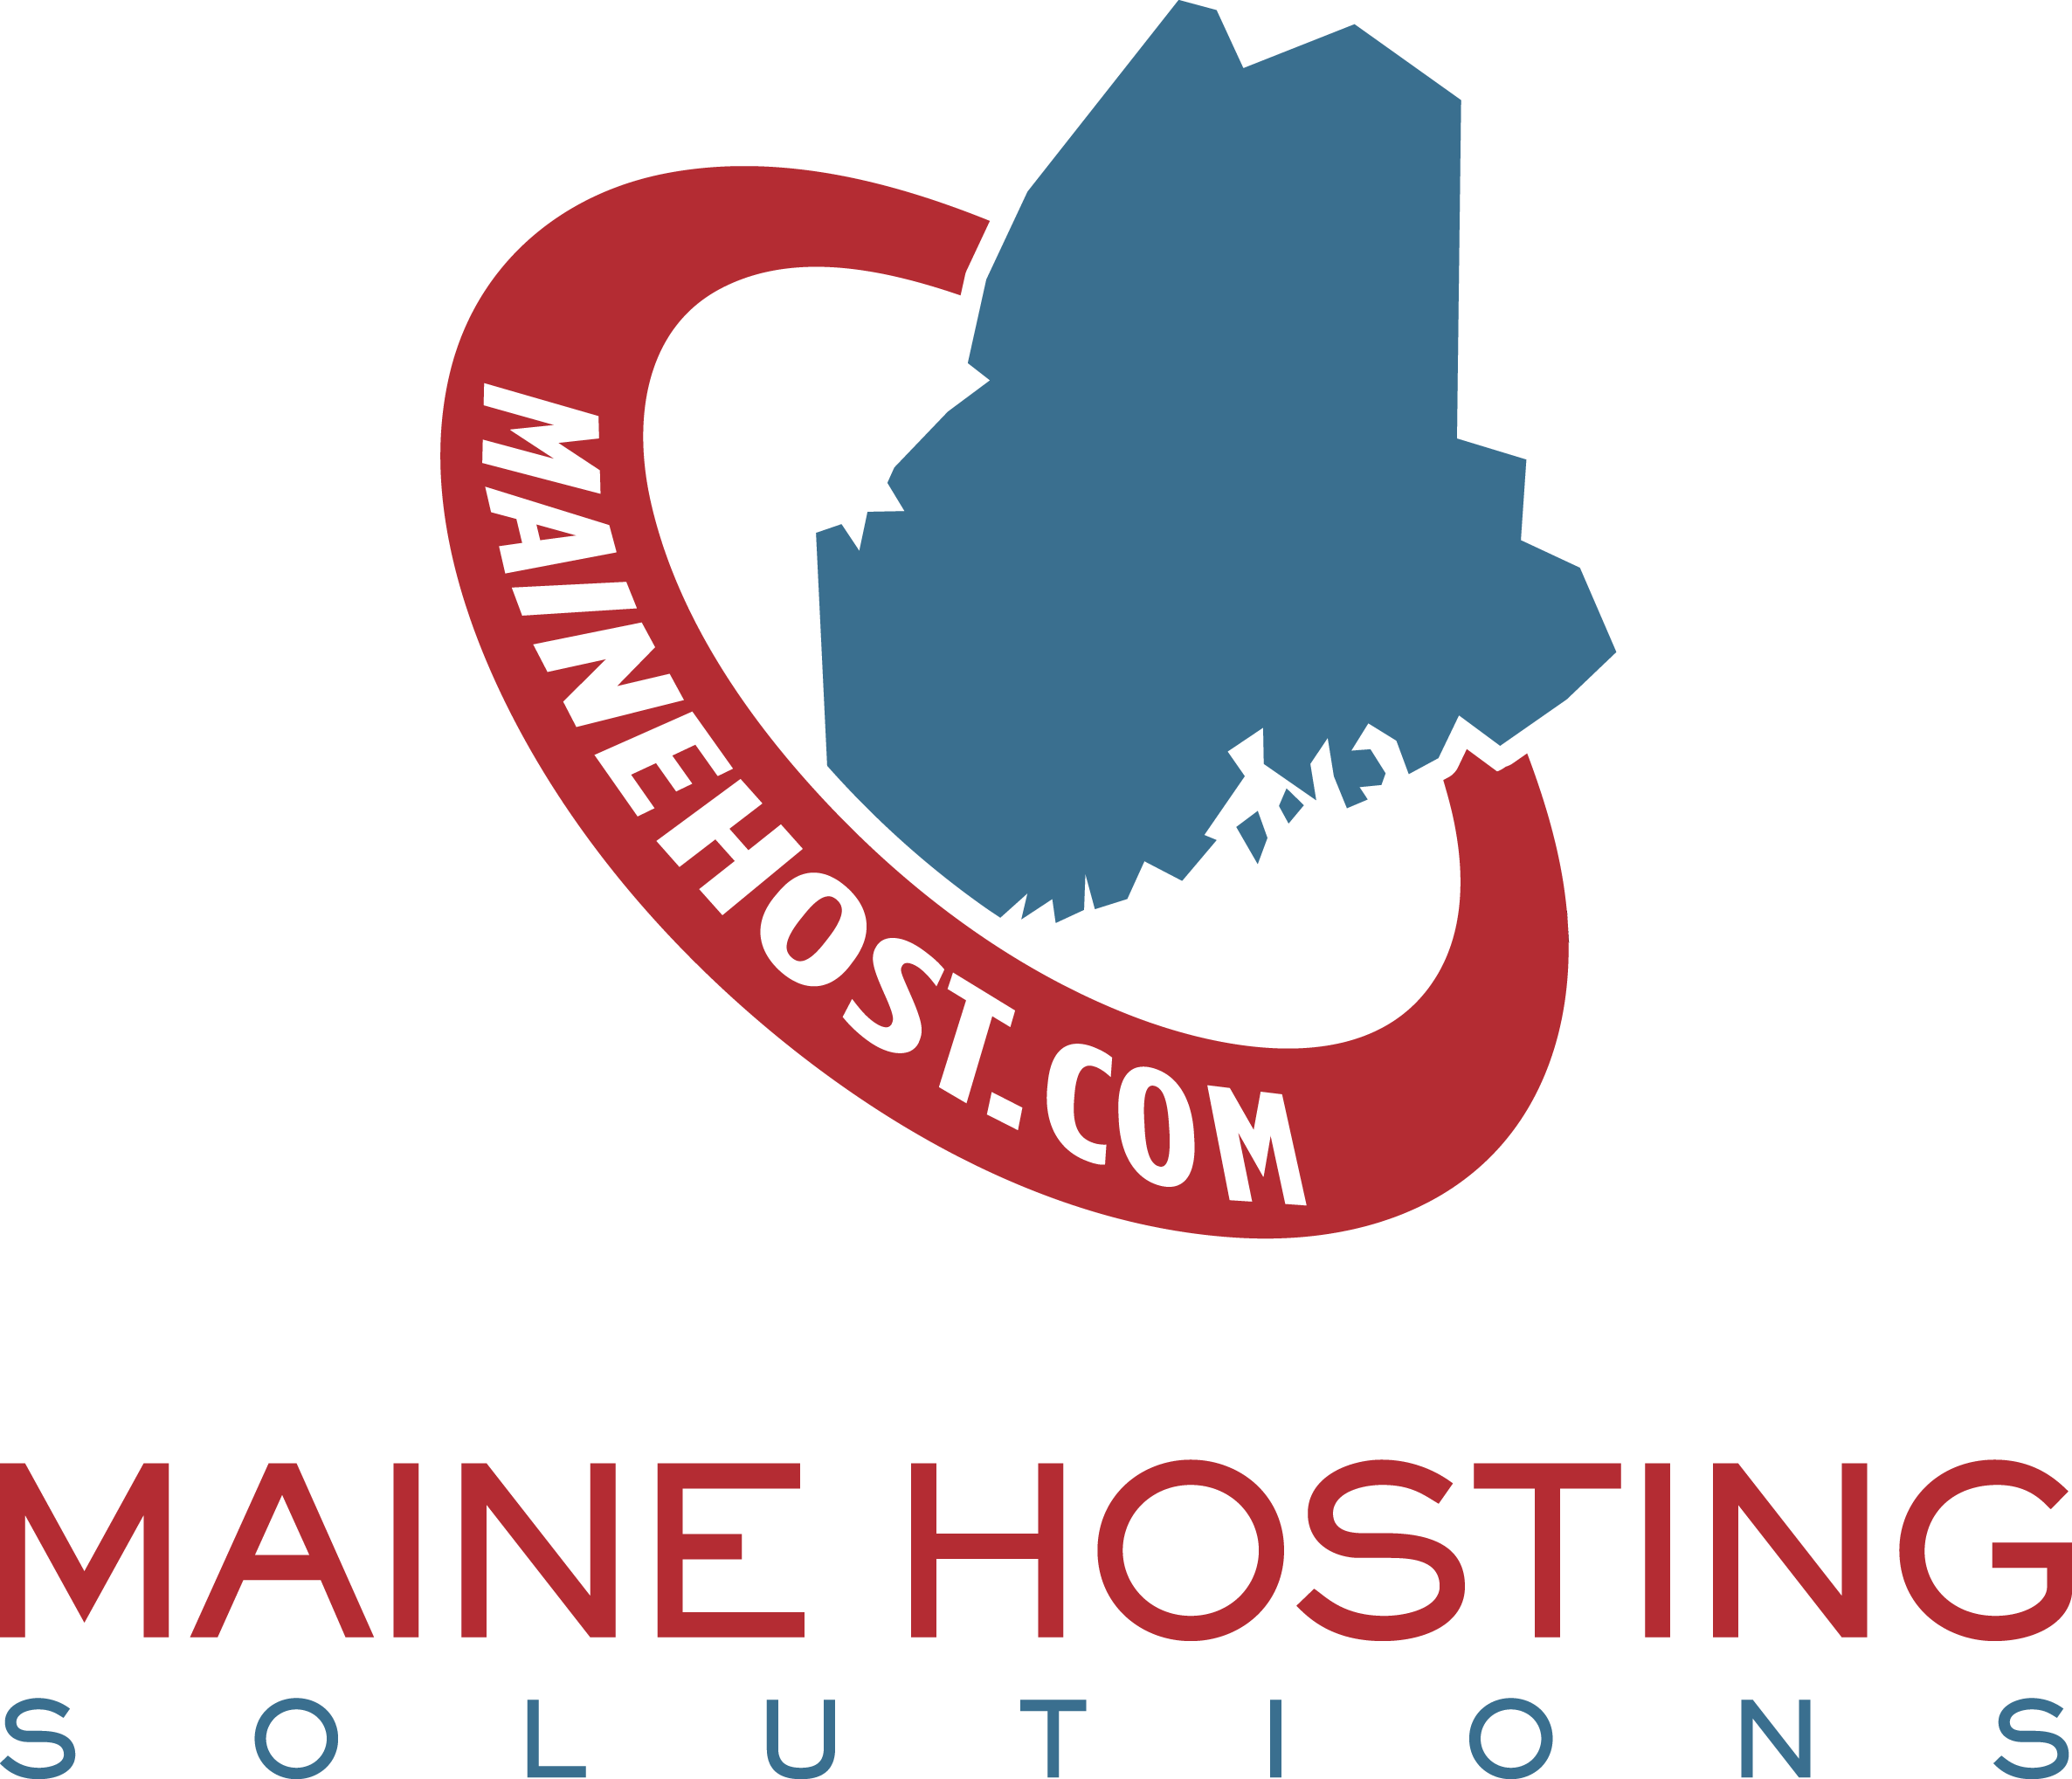 The Maine Hosting Solutions logo